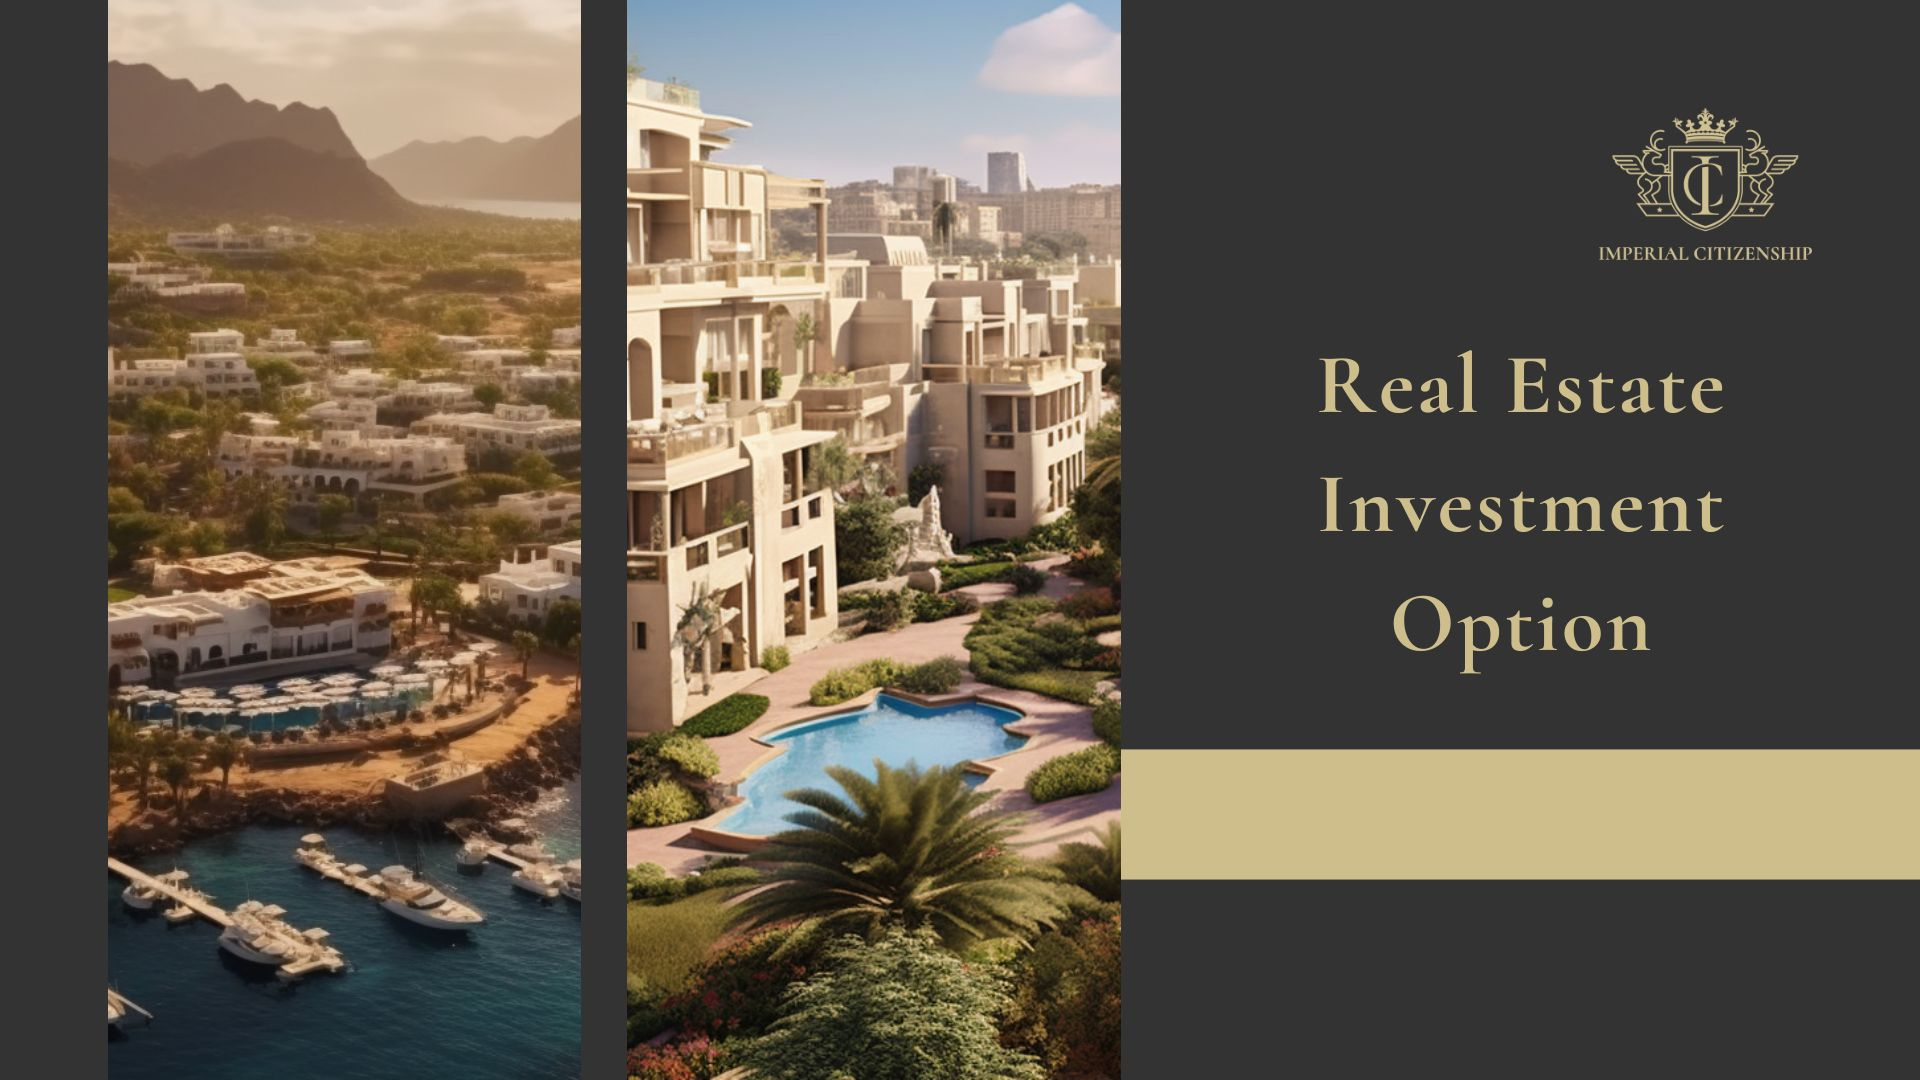 Real Estate Investment Option for Egypt citizenship